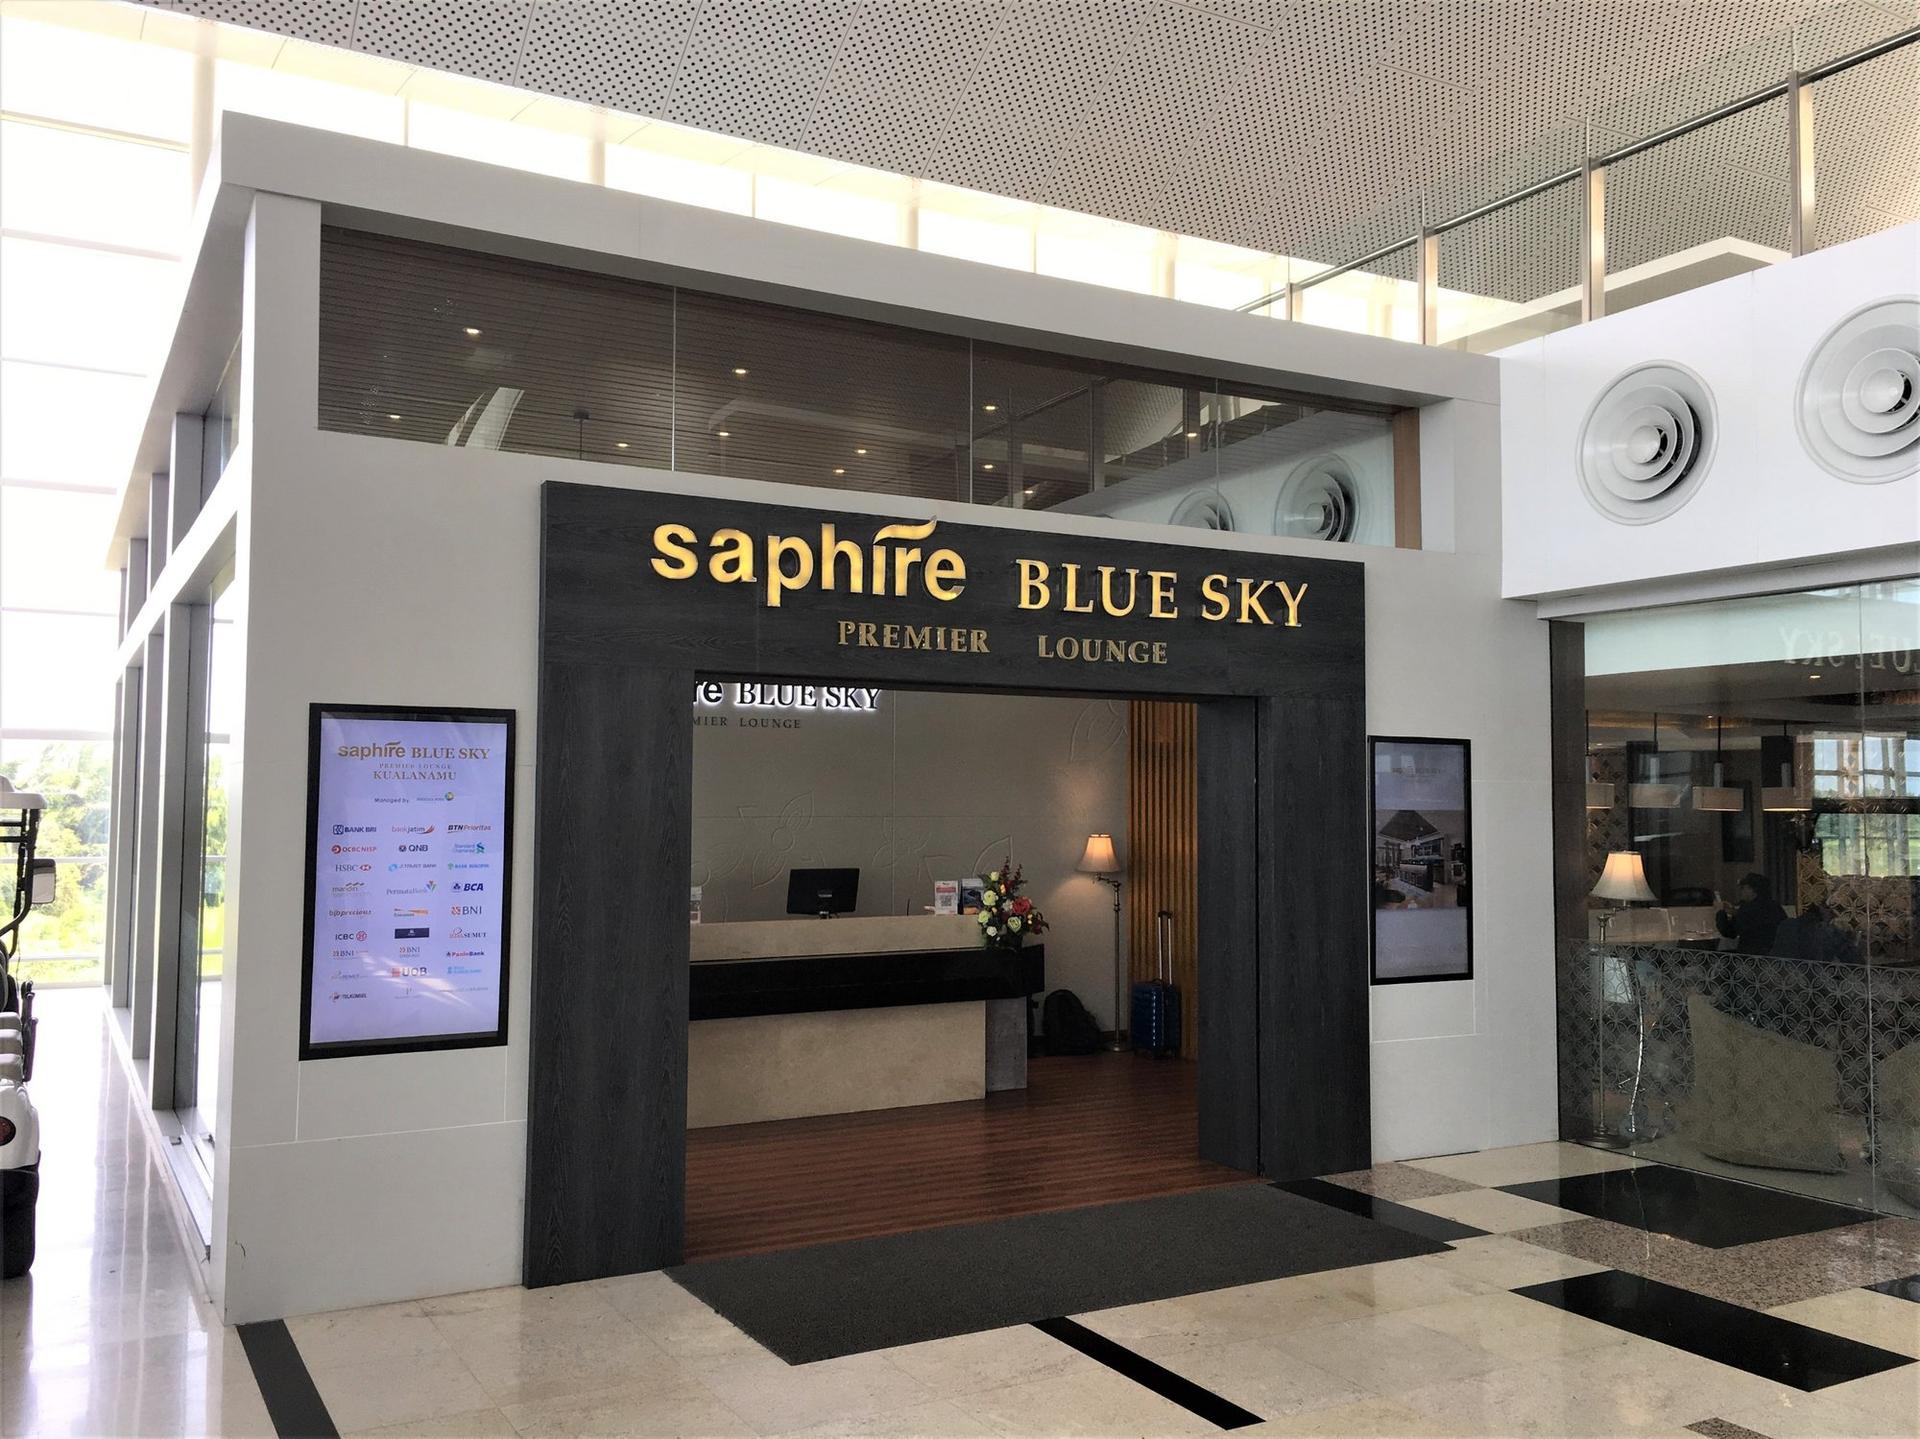 Saphire Blue Sky Executive Lounge image 2 of 26